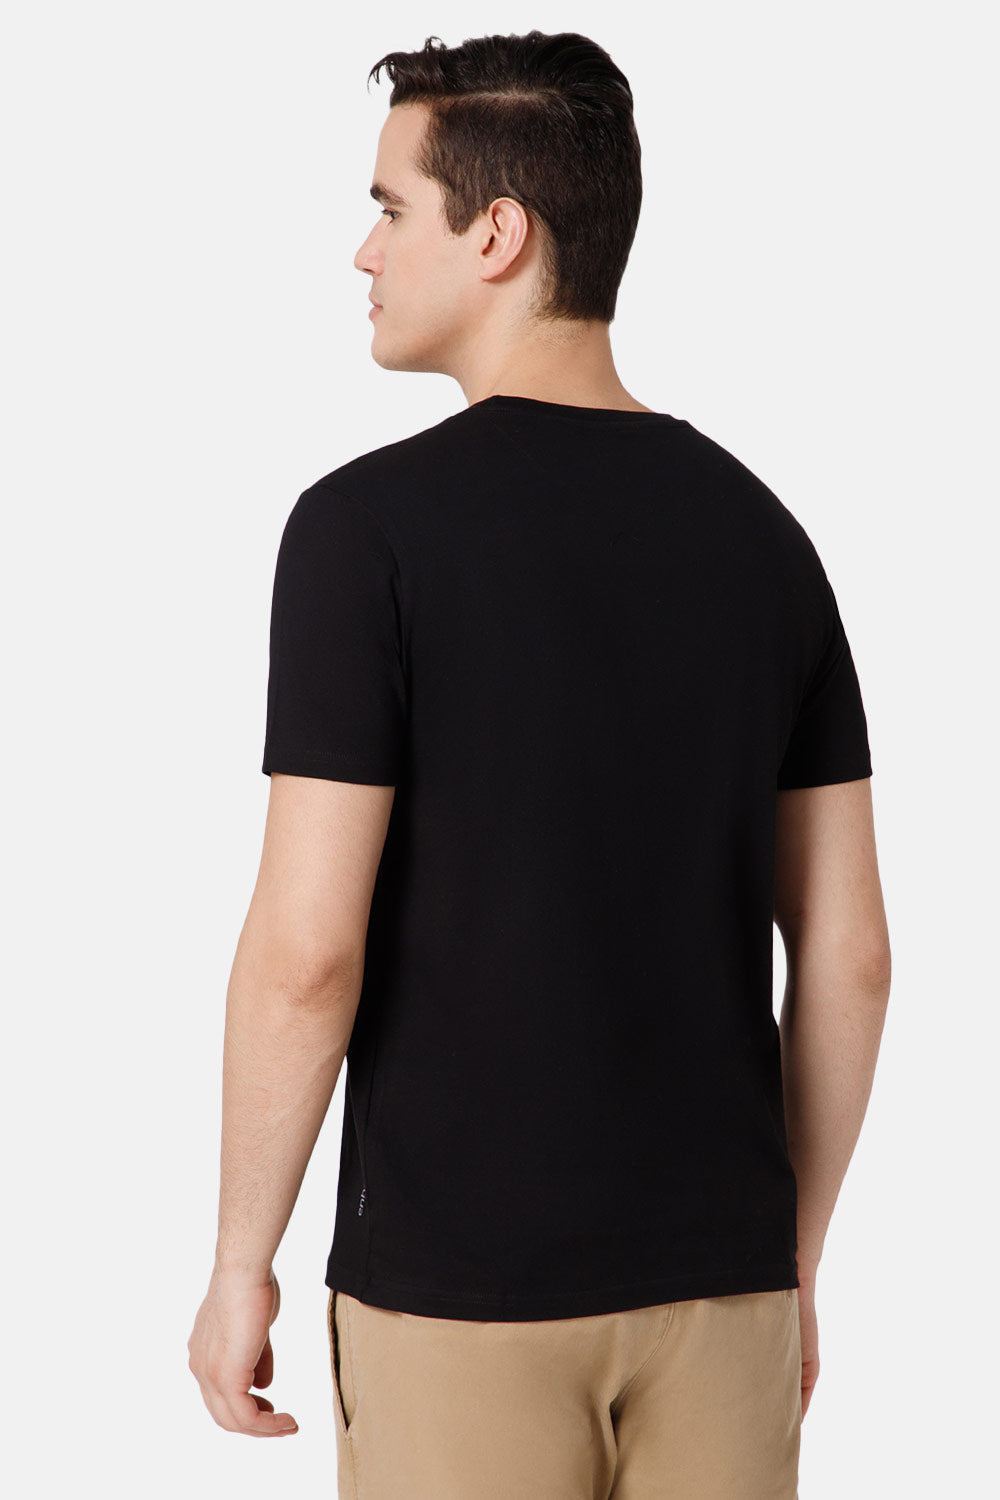 Enhance Printed Crew Neck Men's Casual T-Shirts - Black - TS22